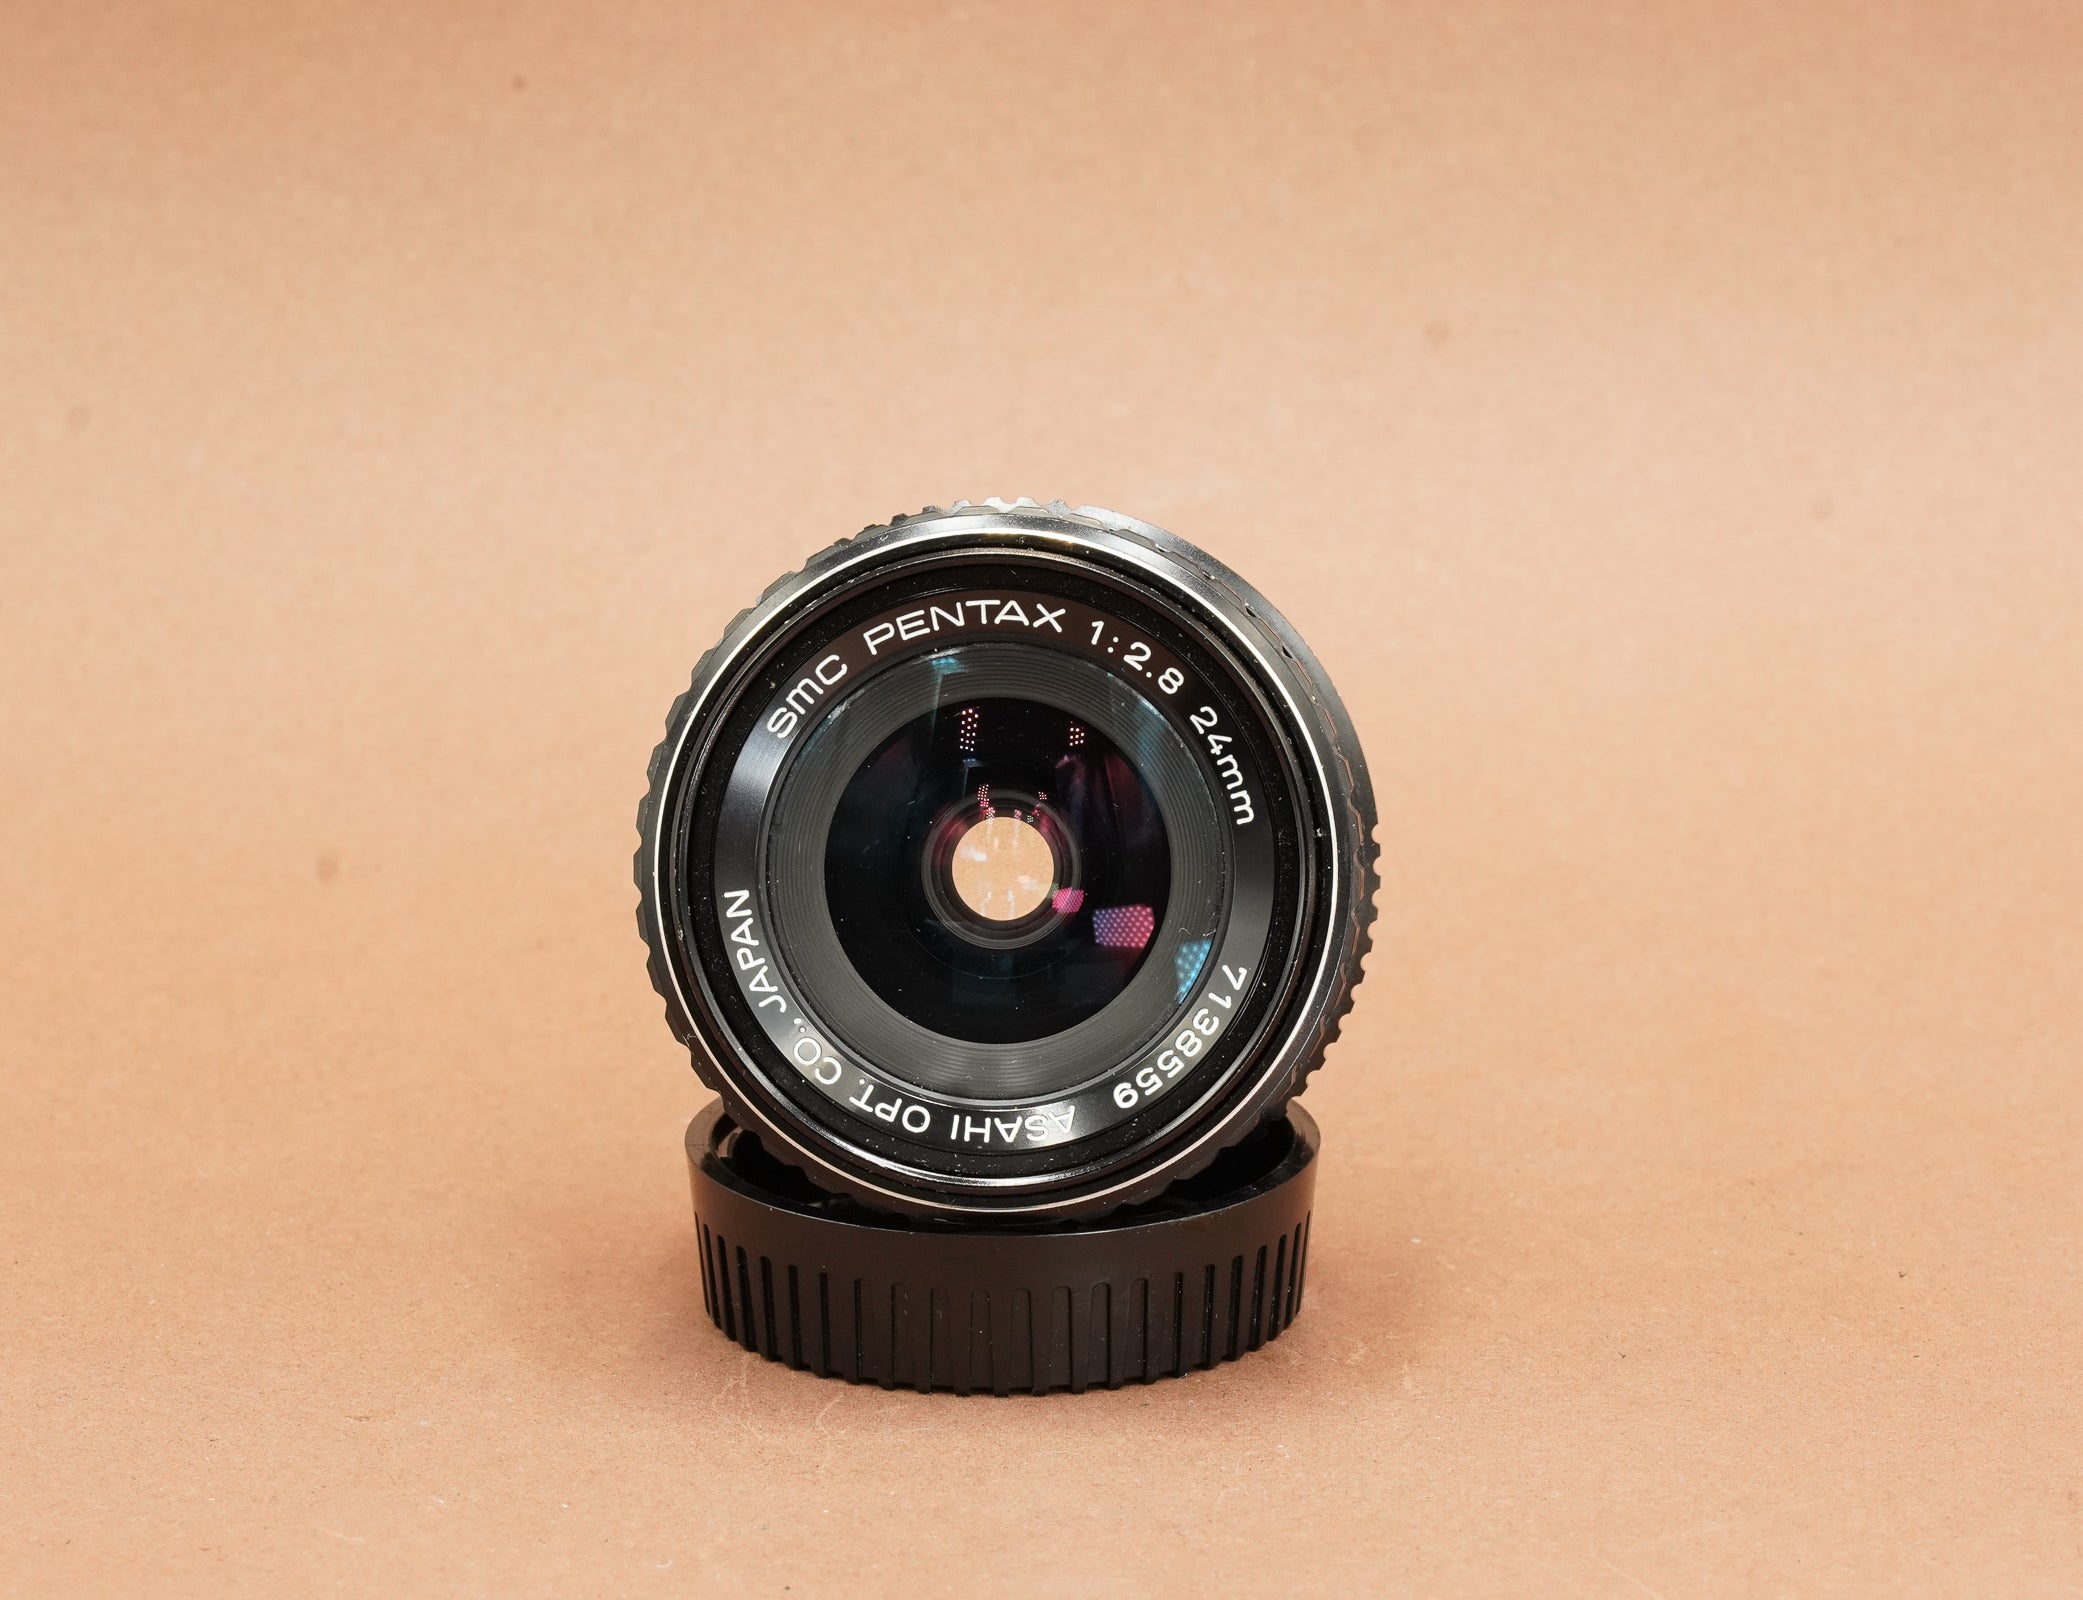 Pentax SMC 24mm f2.8 wide angle